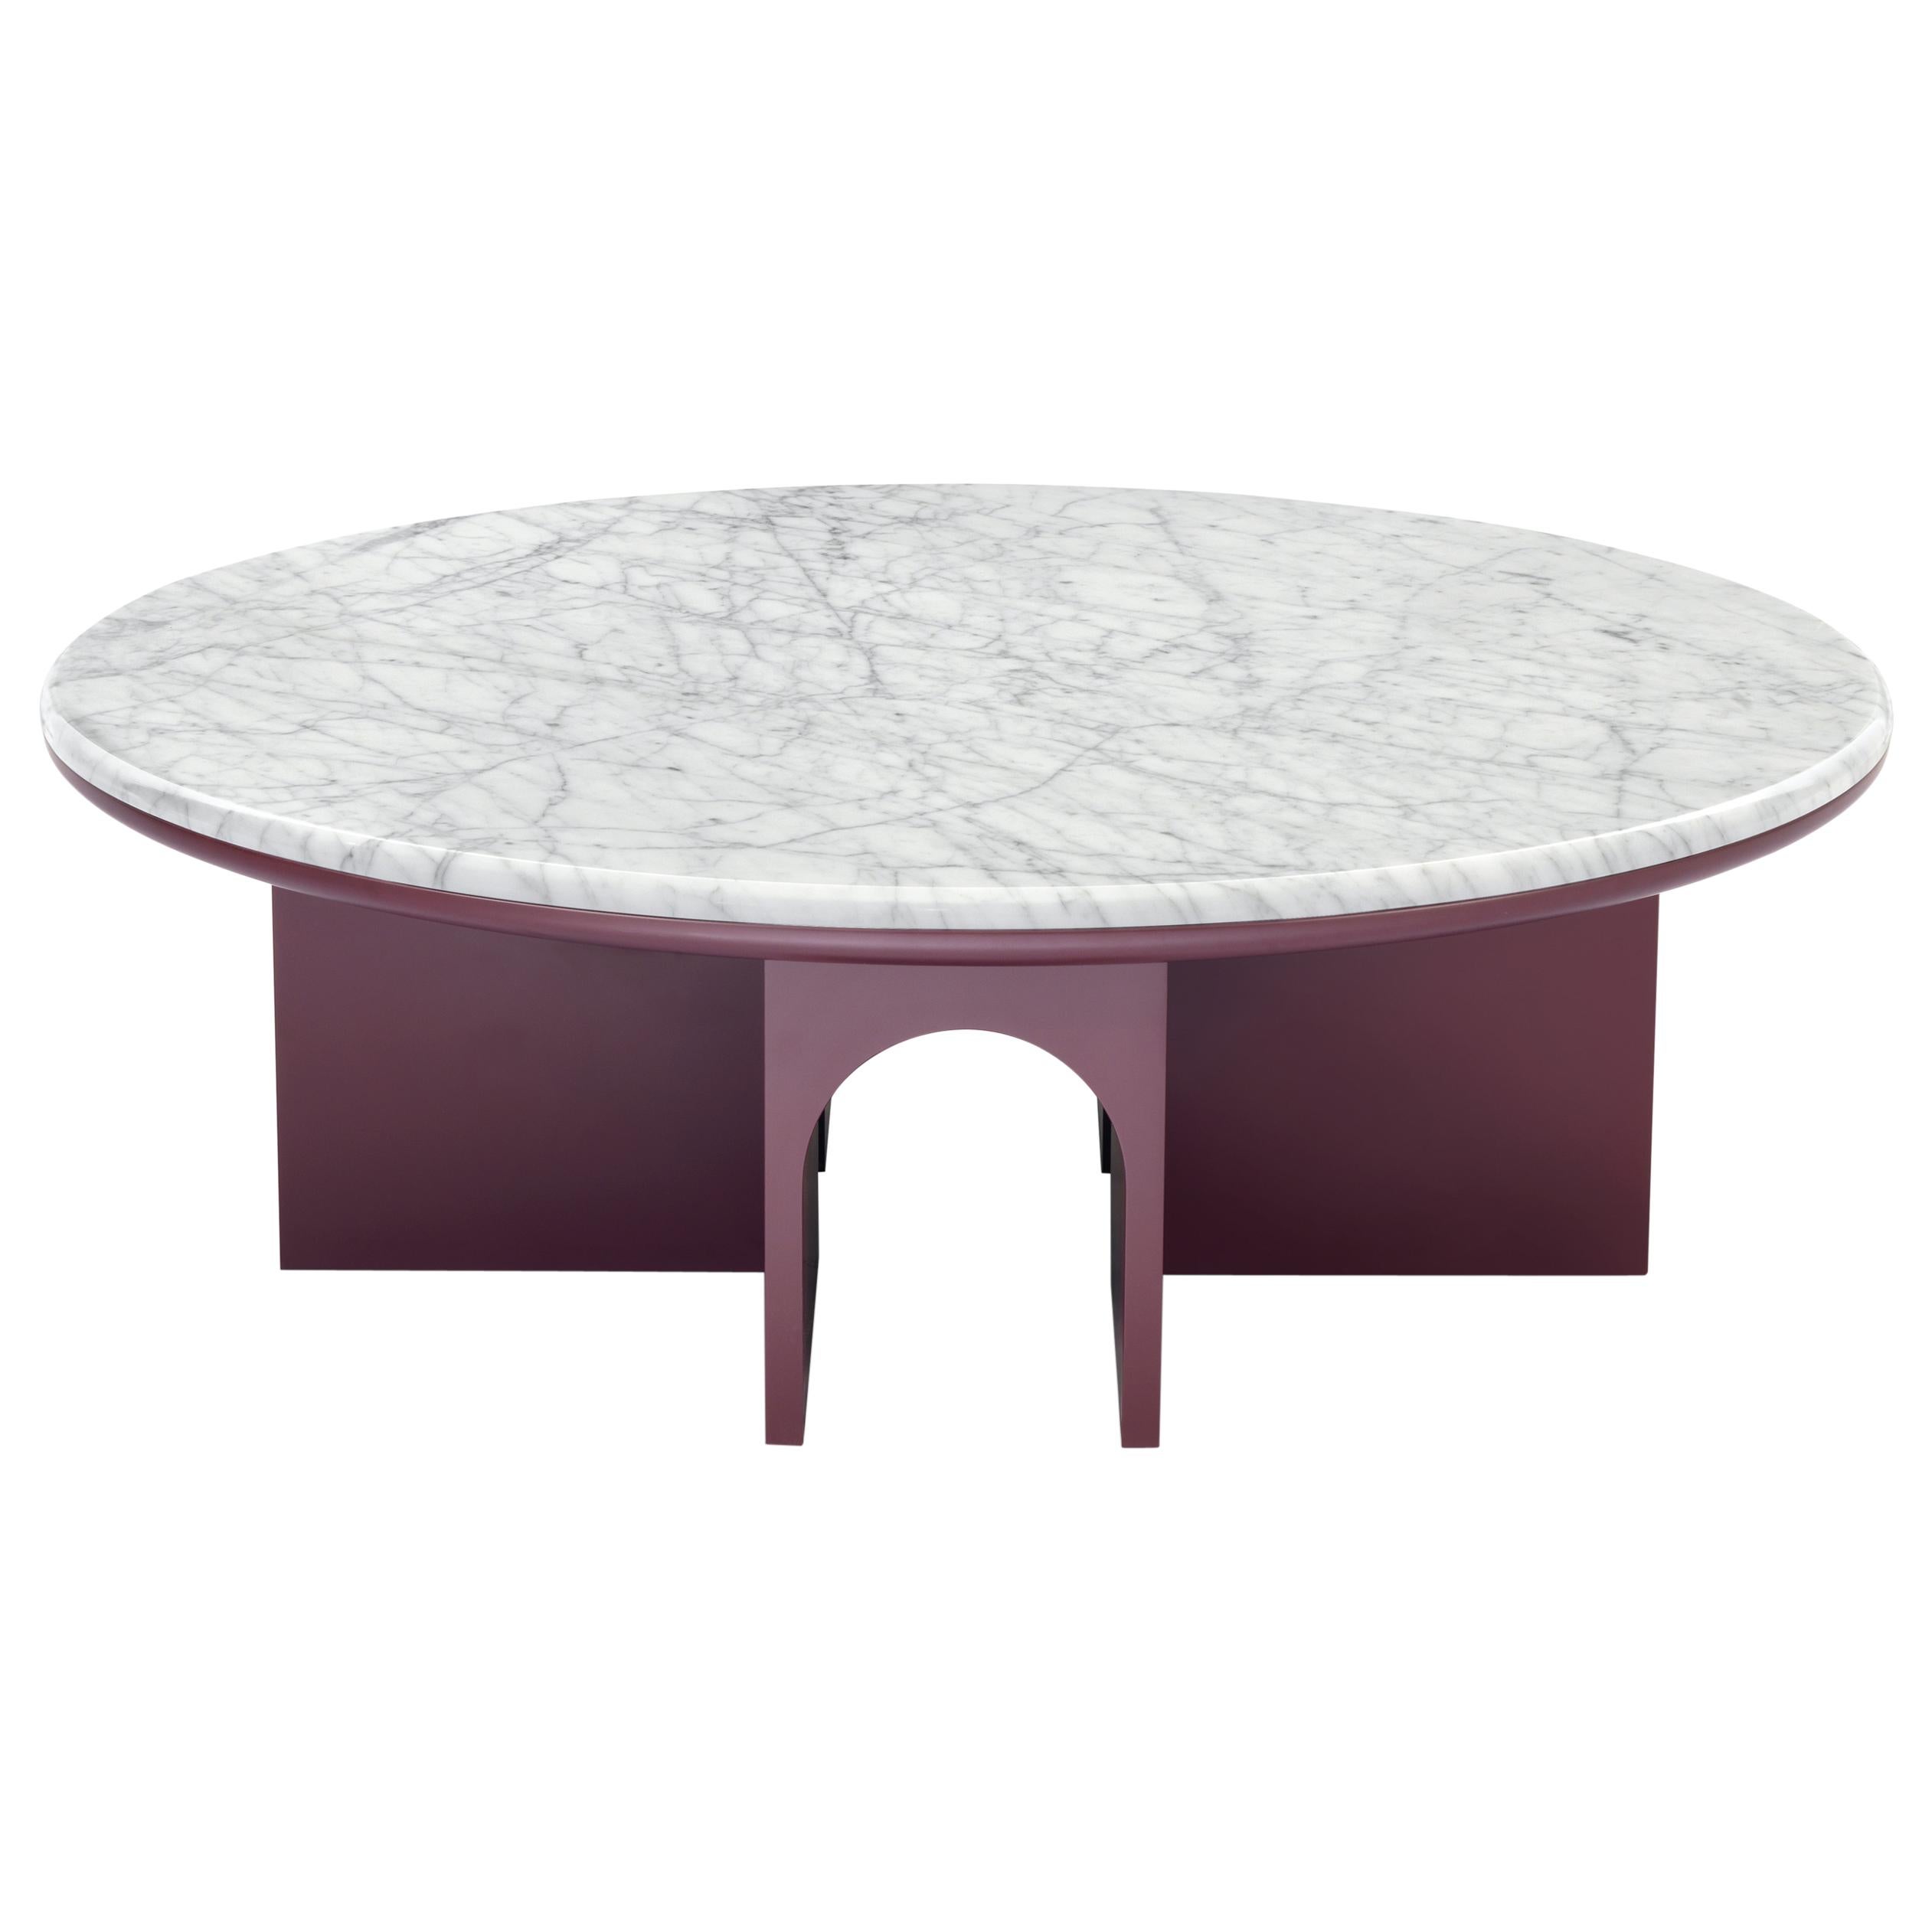 Arflex Arcolor 100cm Small Table in White Carrara Marble Top by Jaime Hayon